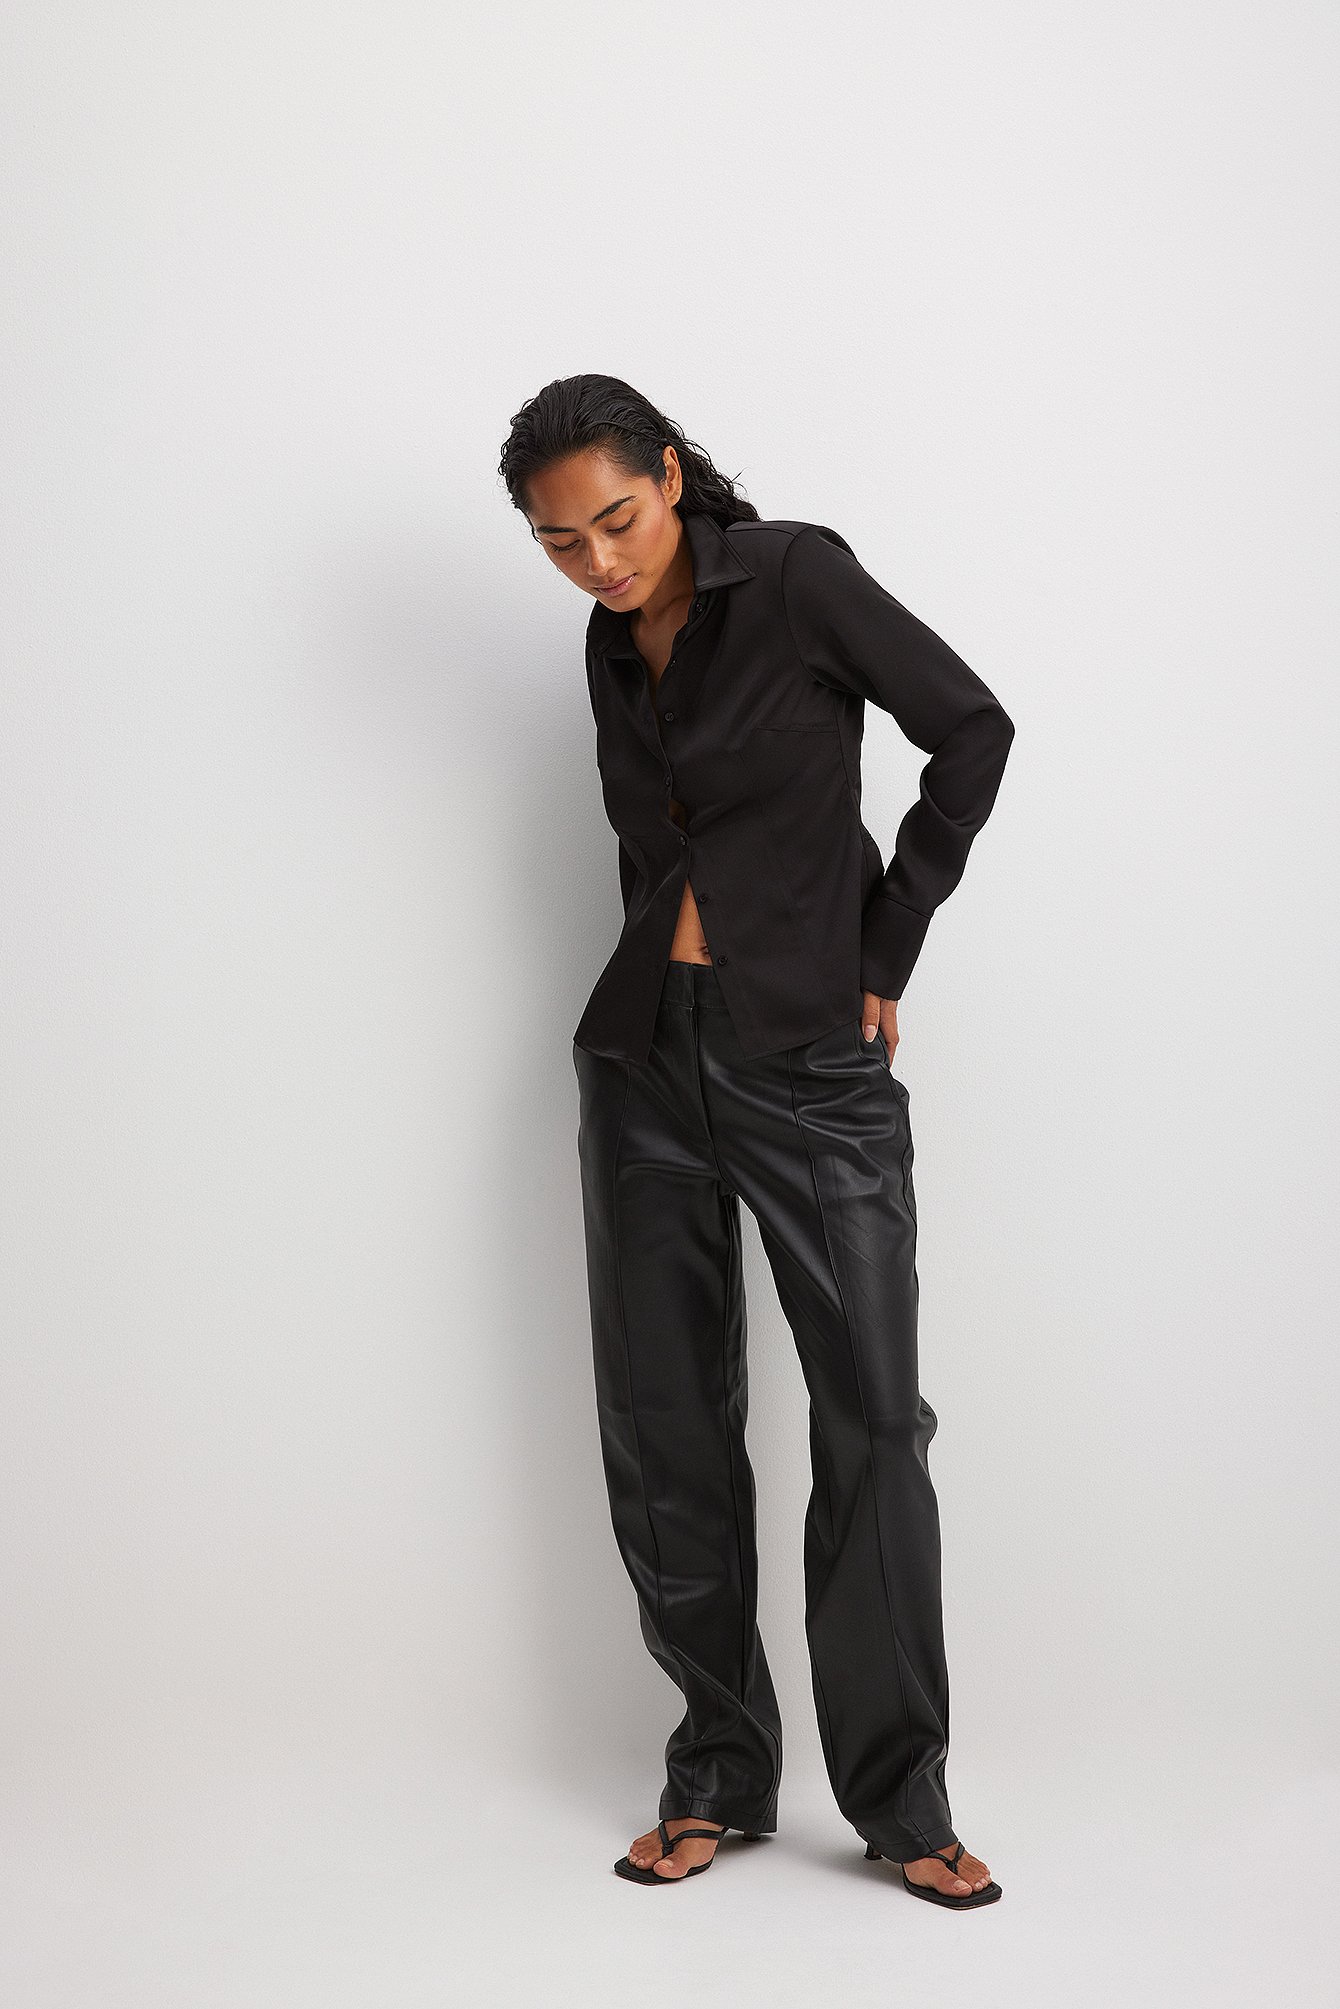 41 Womens Faux Leather Trouserspants ideas  pants for women womens faux  leather leather trousers